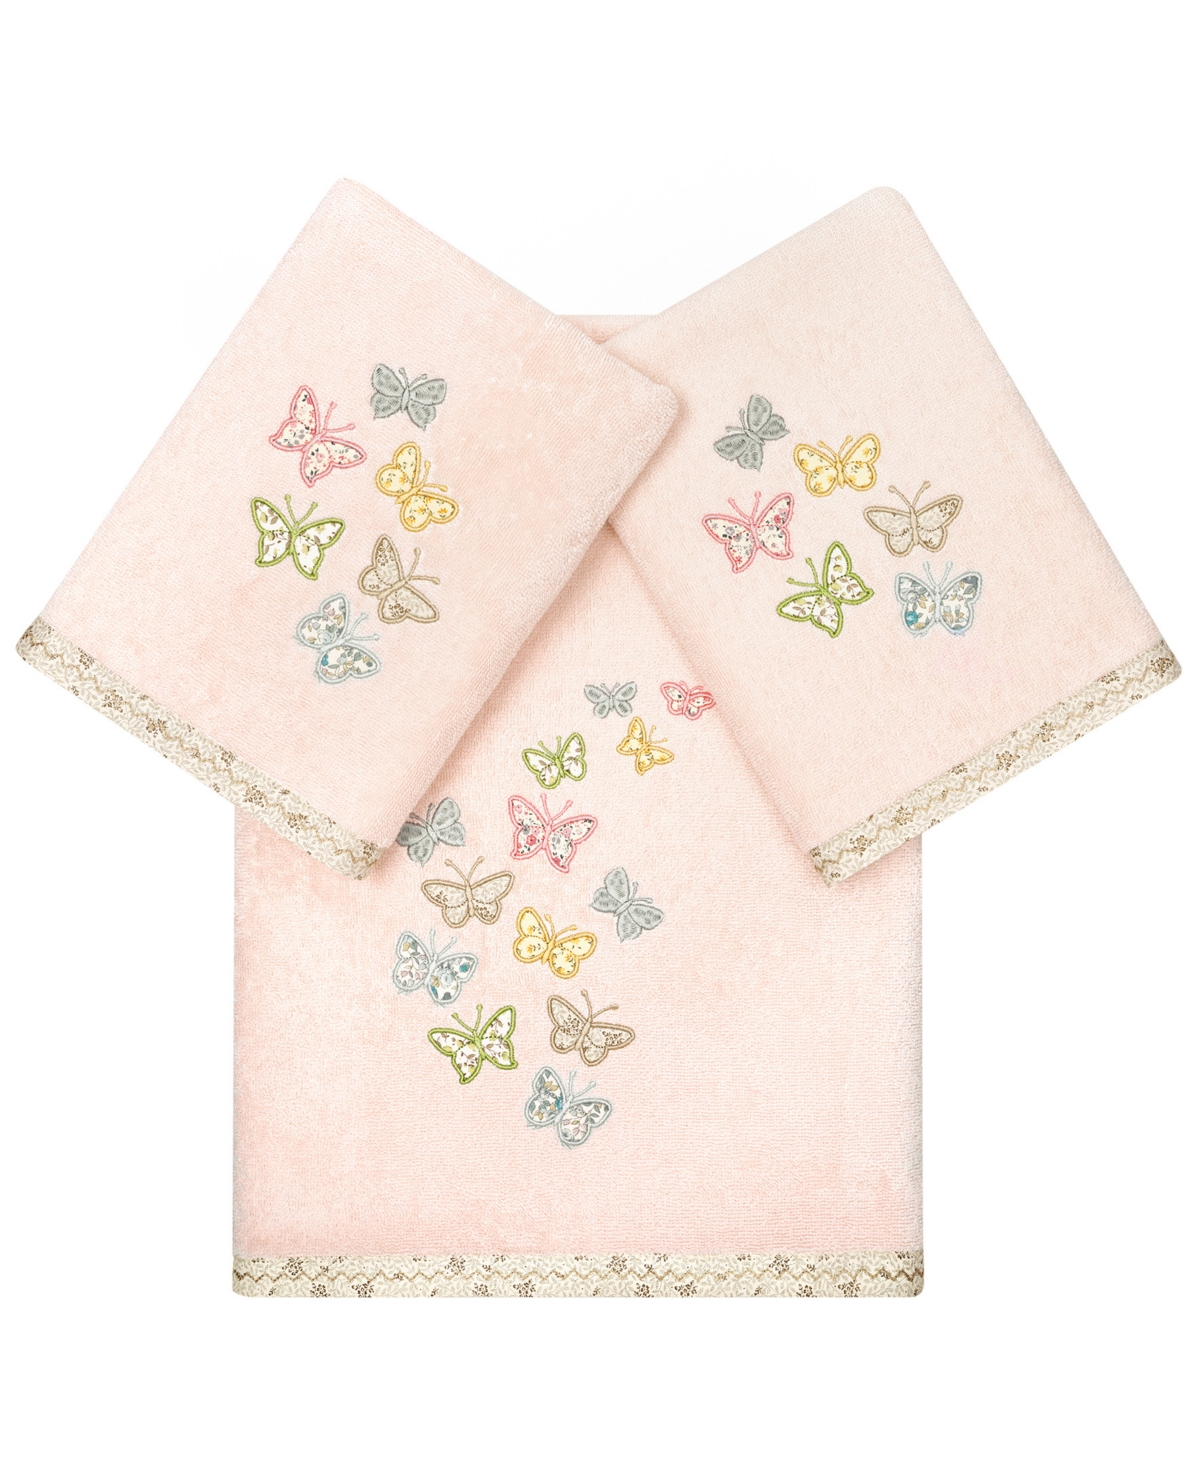 Shop Linum Home Textiles Turkish Cotton Mariposa Embellished Towel Set, 3 Piece In Blush